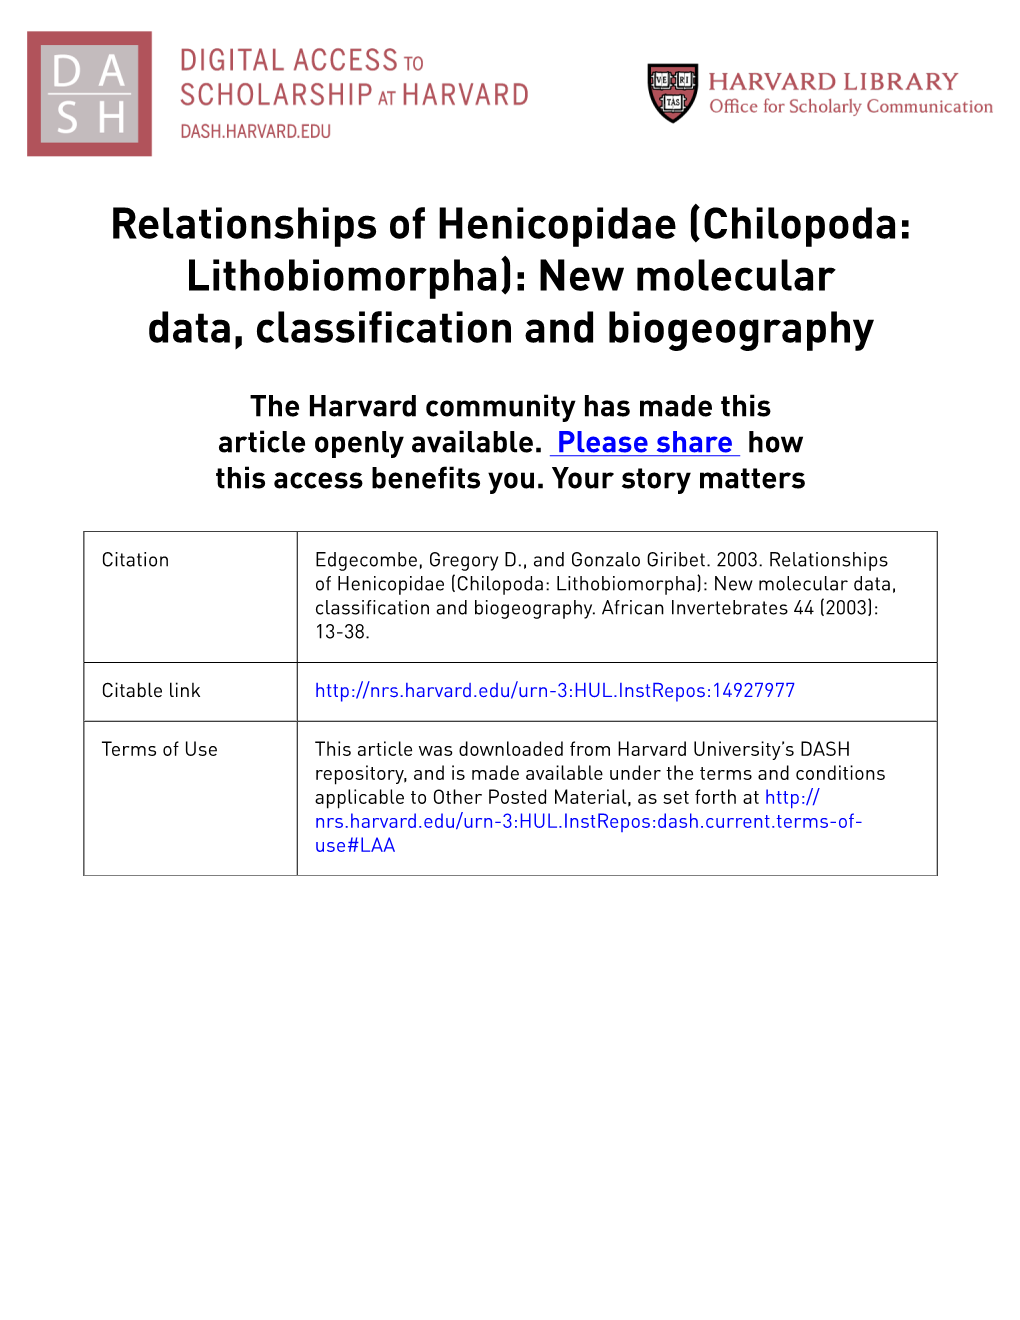 Chilopoda: Lithobiomorpha): New Molecular Data, Classification and Biogeography